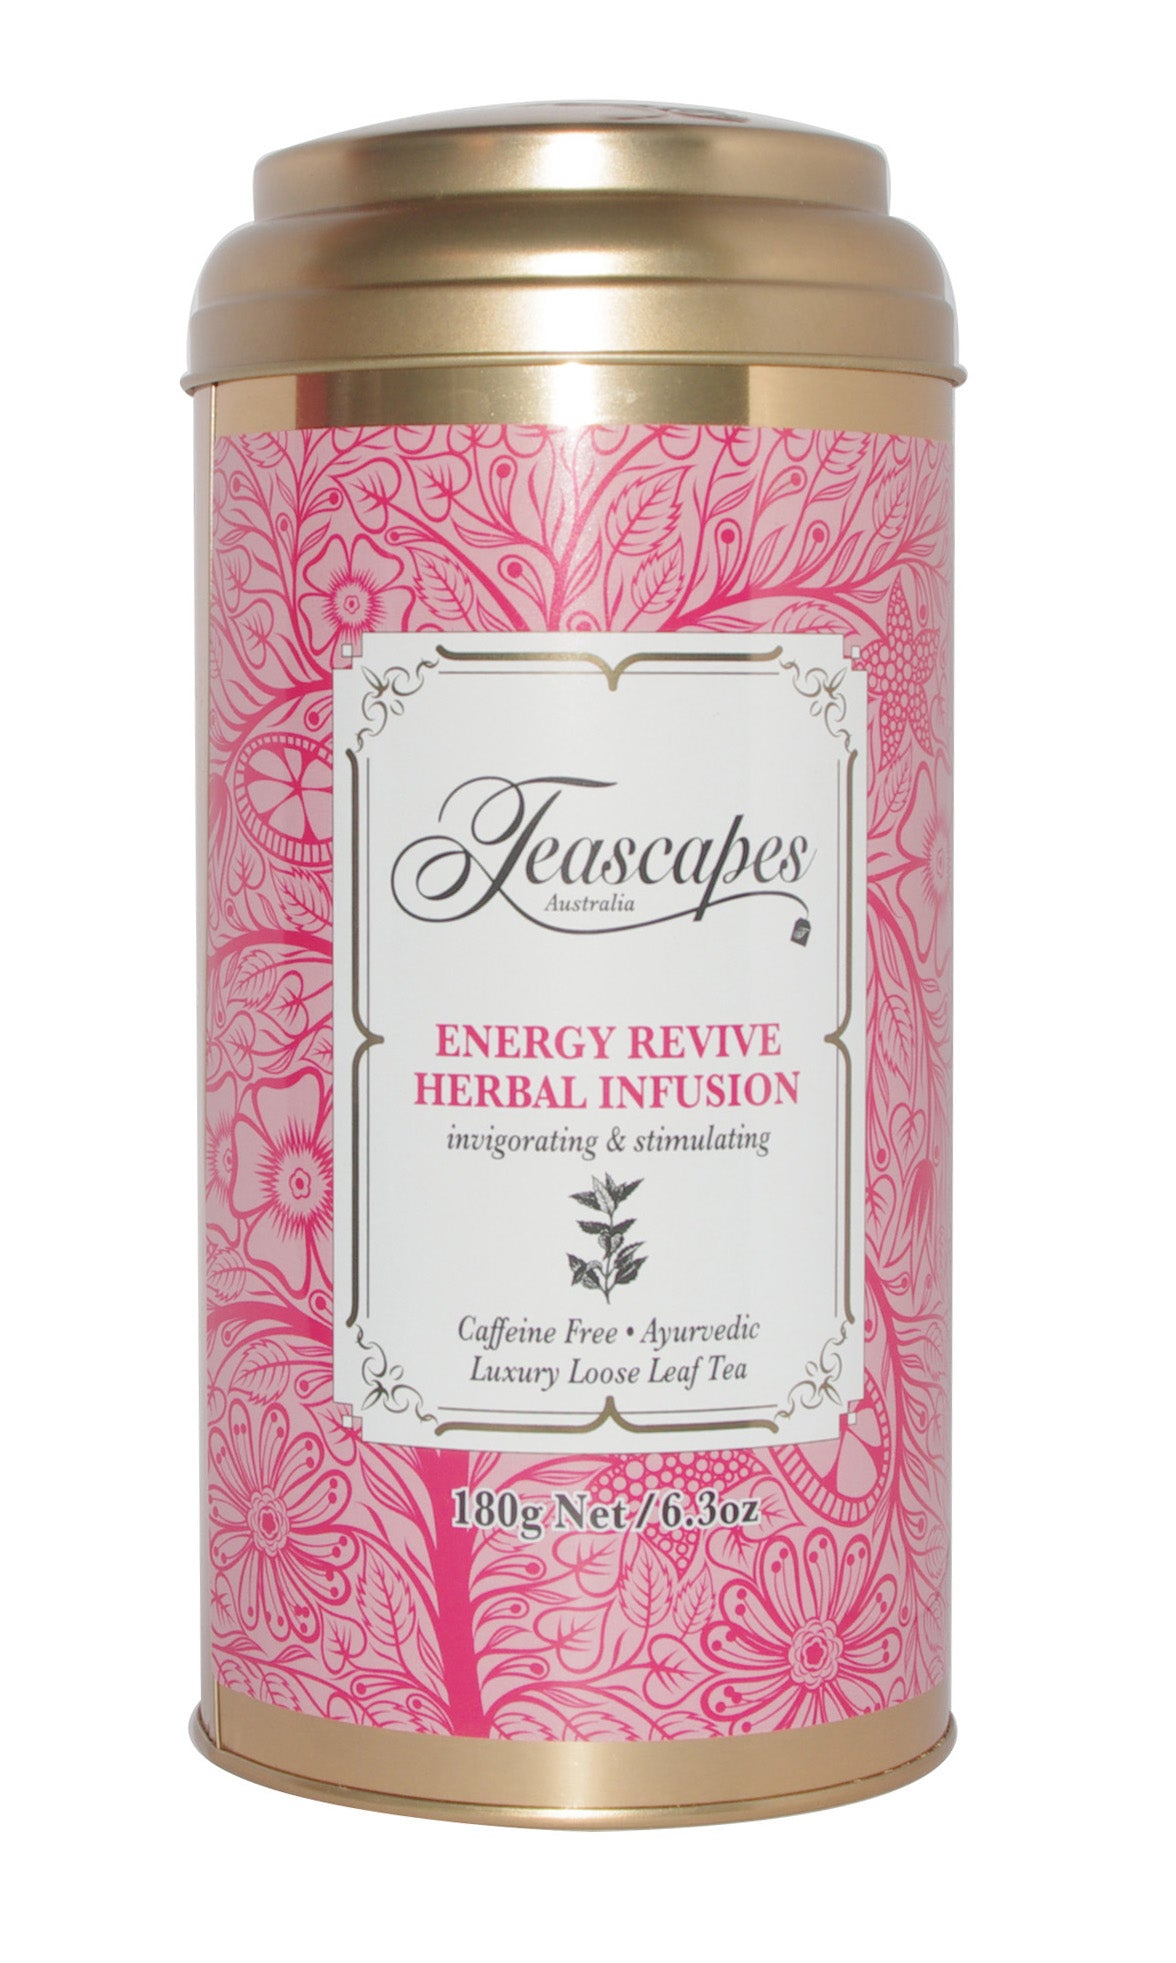 Energy Revive Herbal Tea Infusion 180g Tin